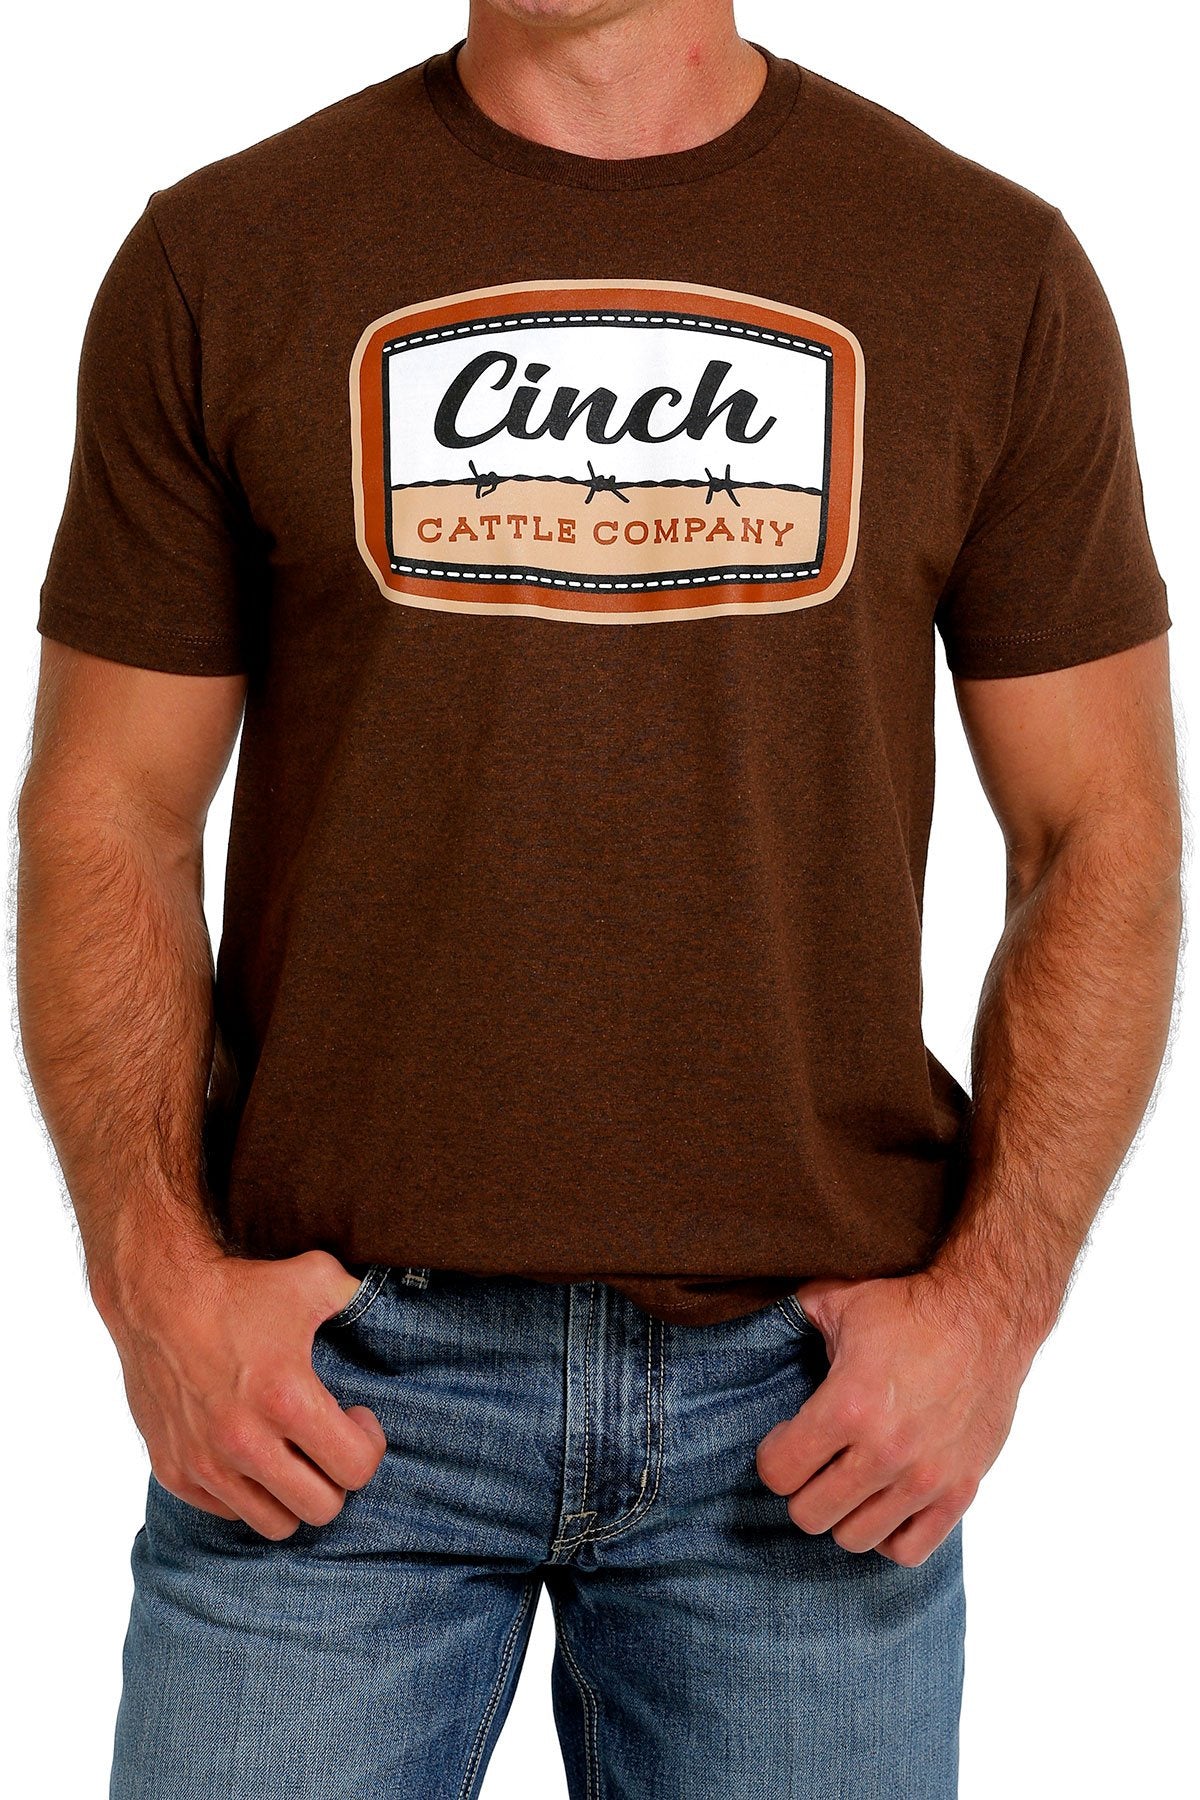 Cinch Mens Cattle Company S/S T-Shirt